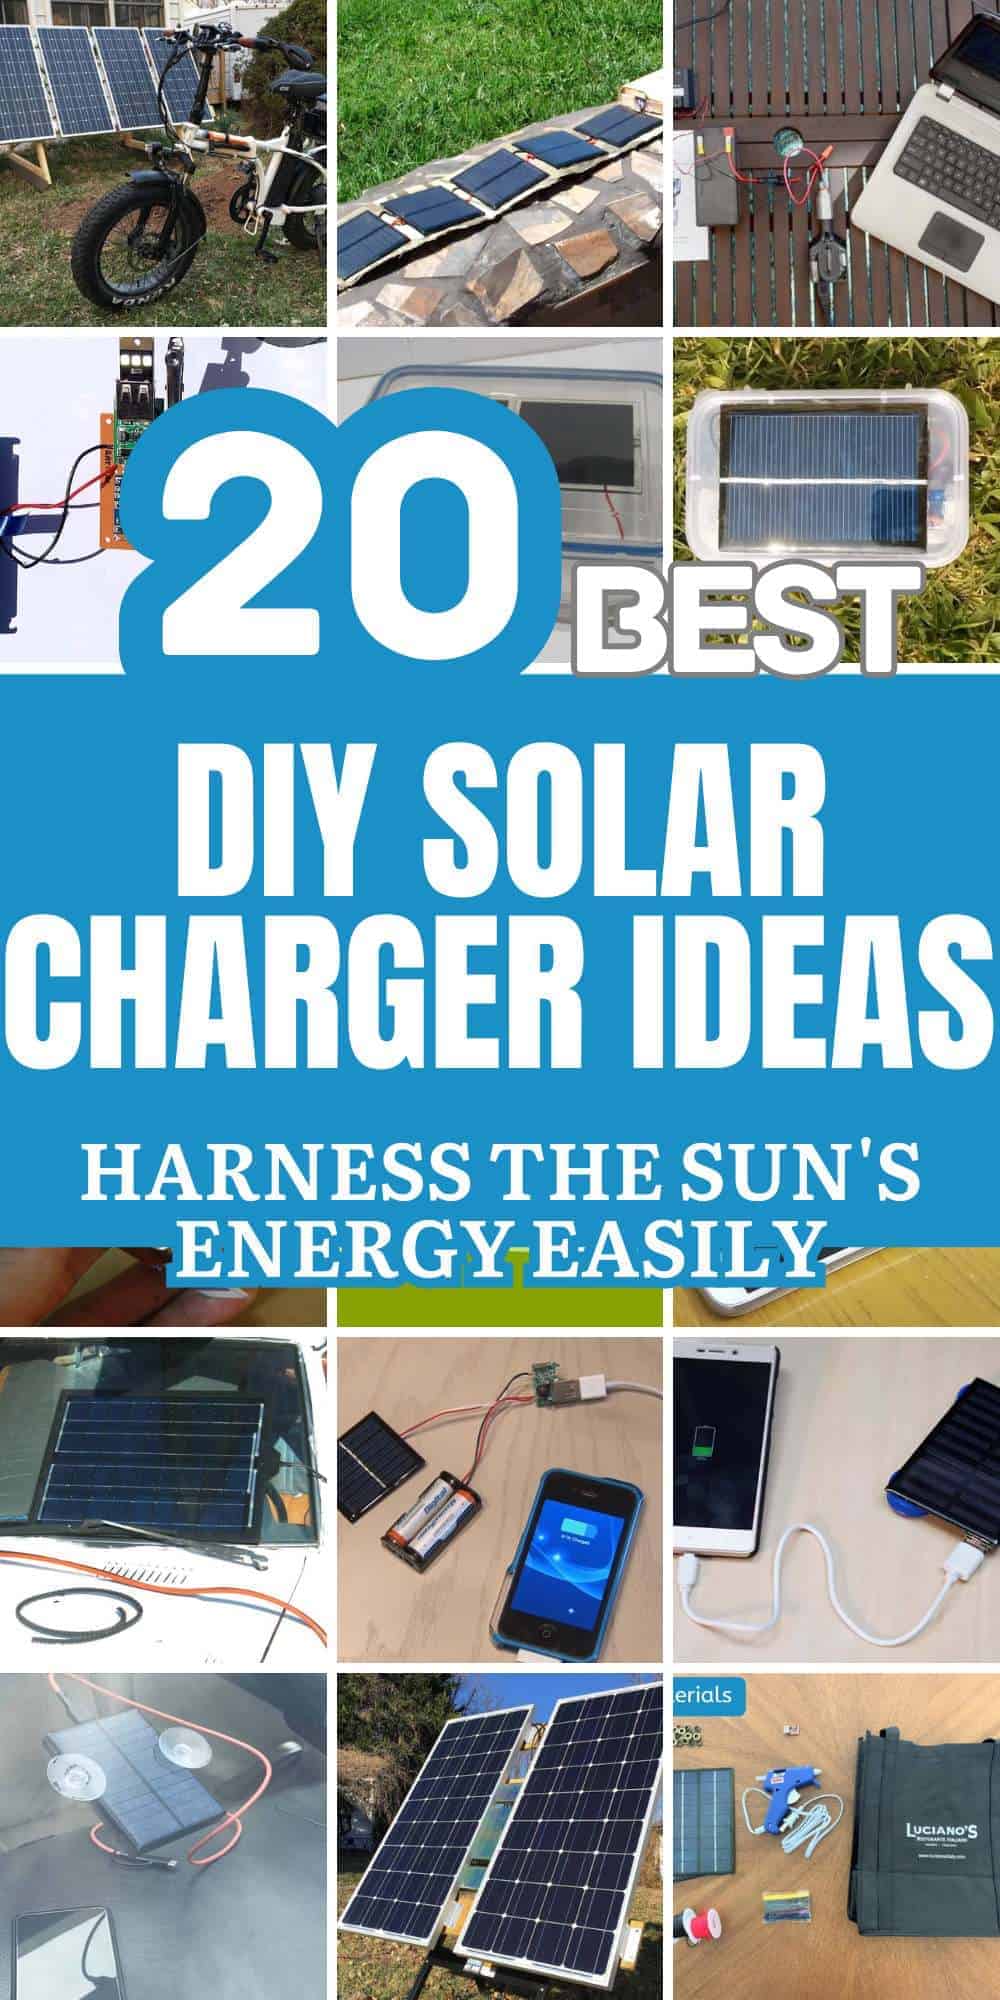 Solar-Charger-Idea